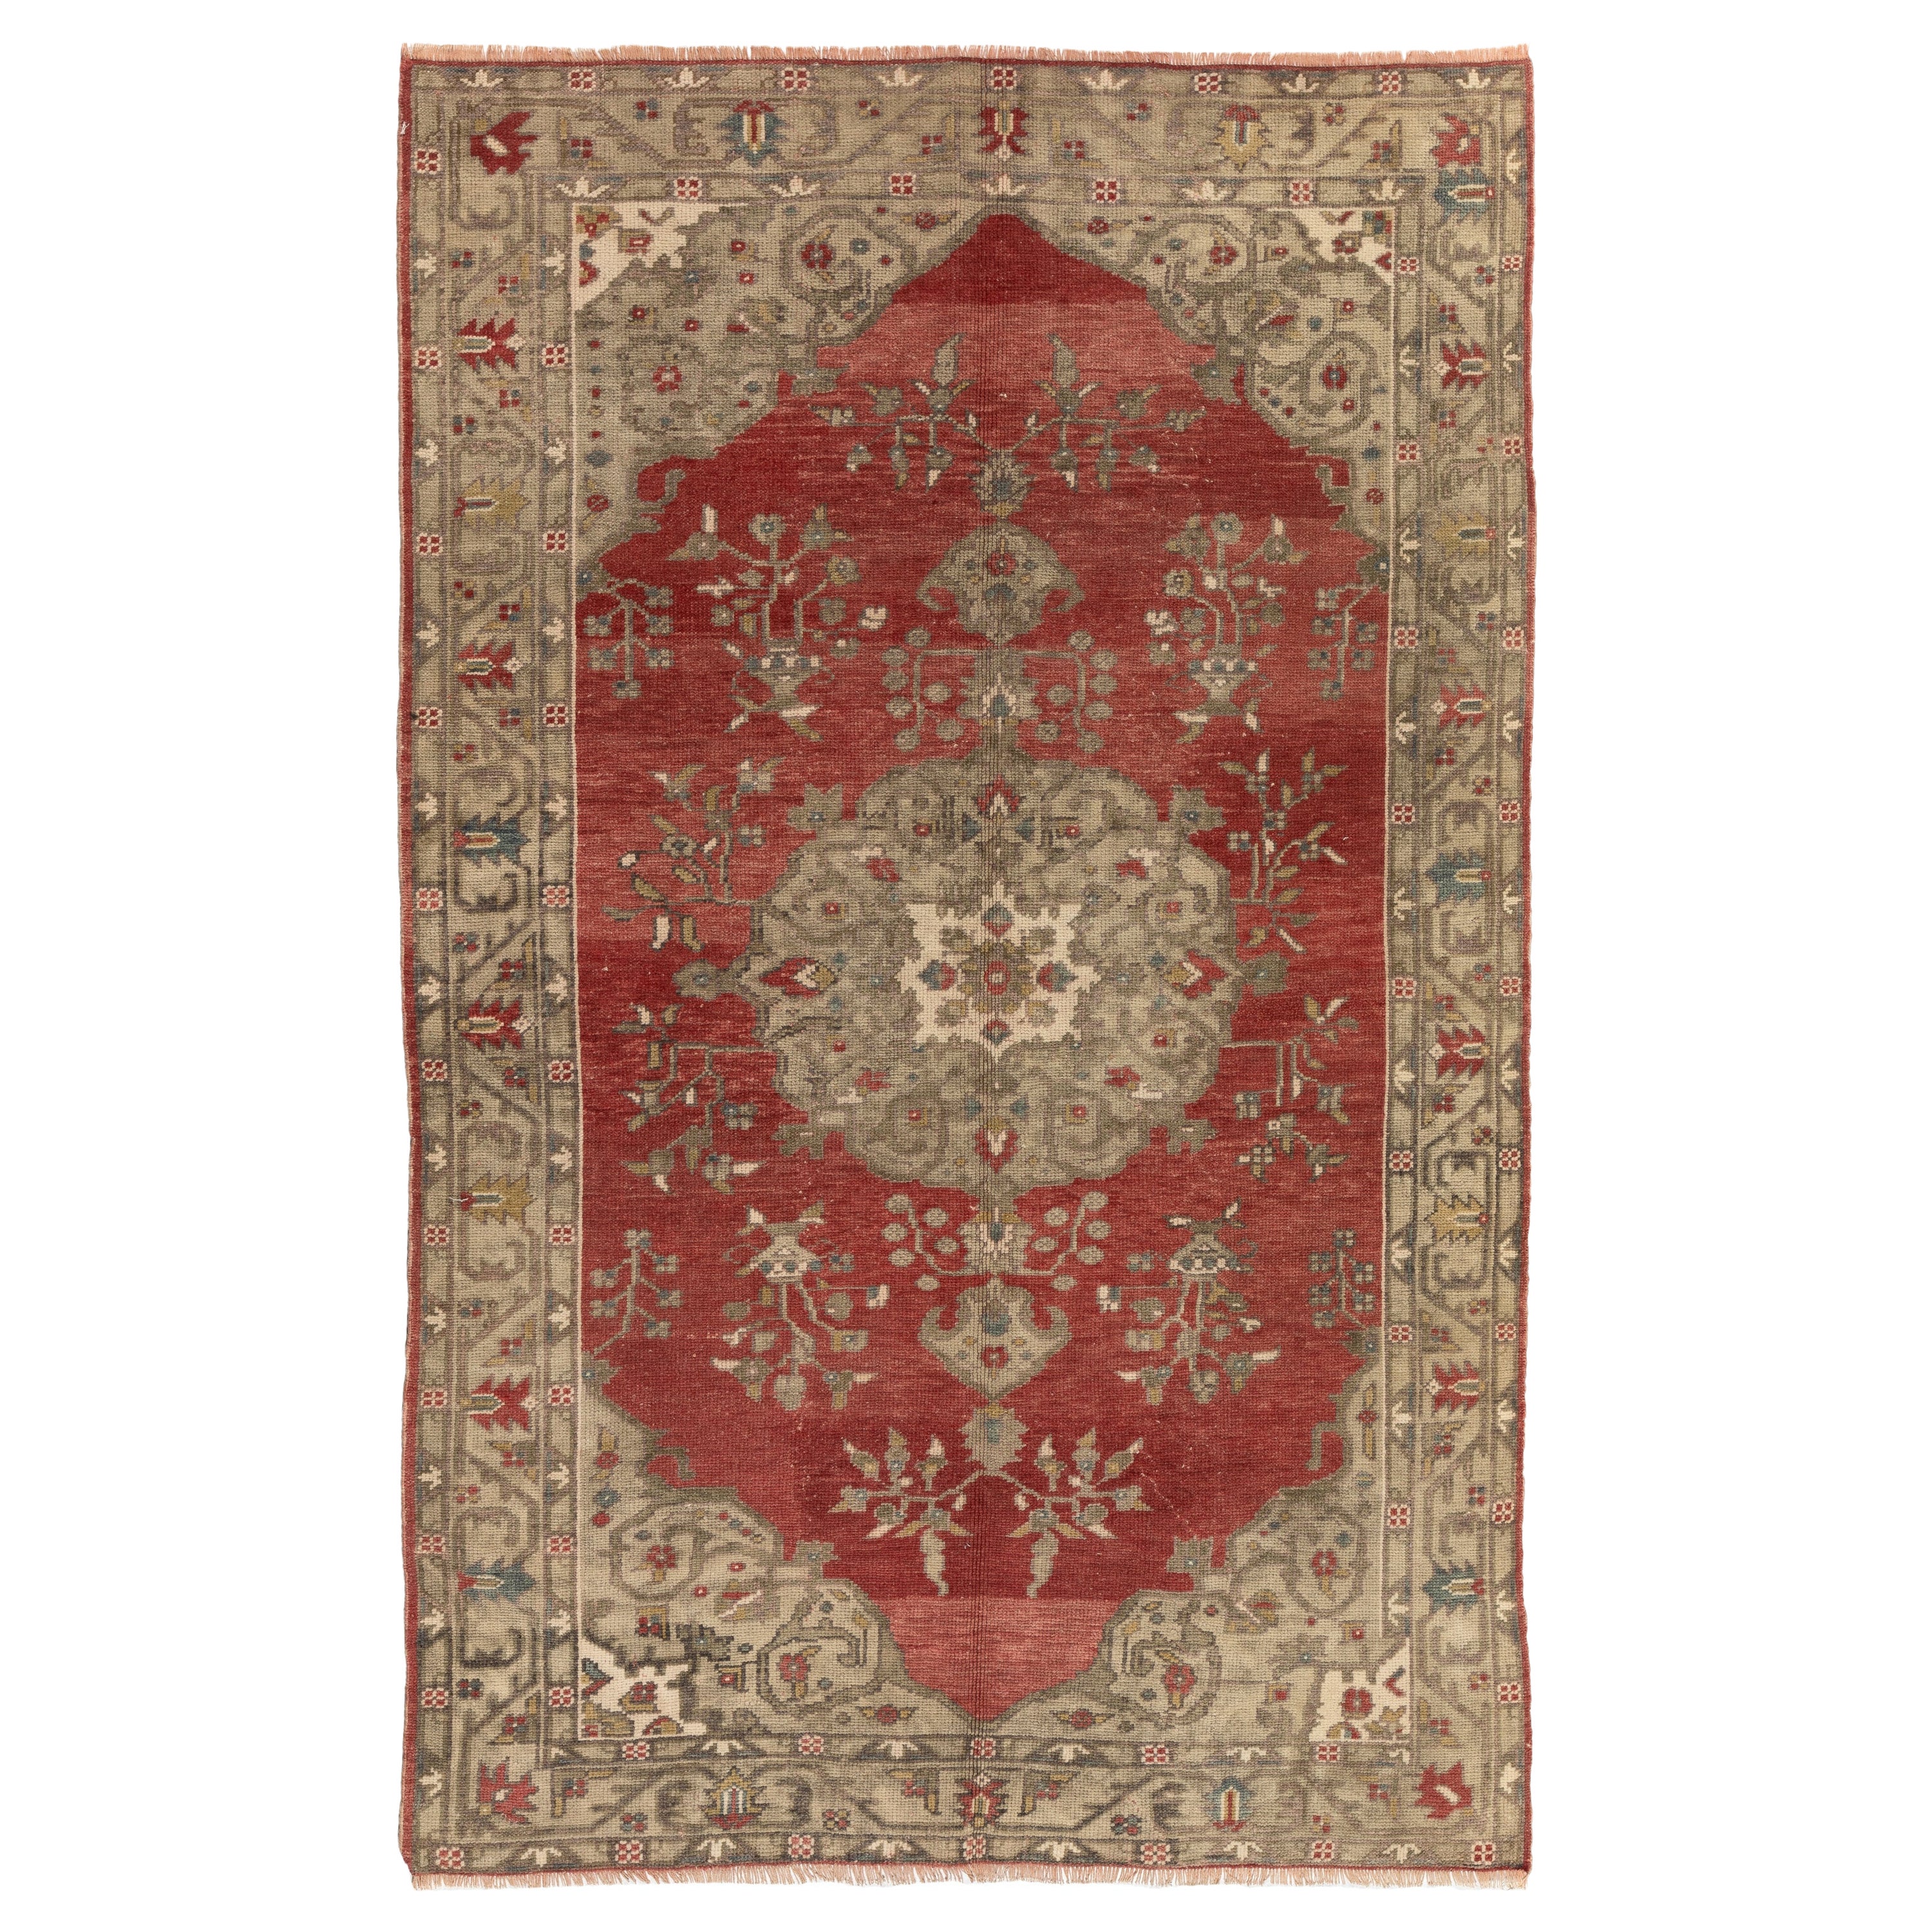 5.5x8.6 Ft Antique Turkish Bergama Rug, circa 1920, One-of-a-kind Carpet